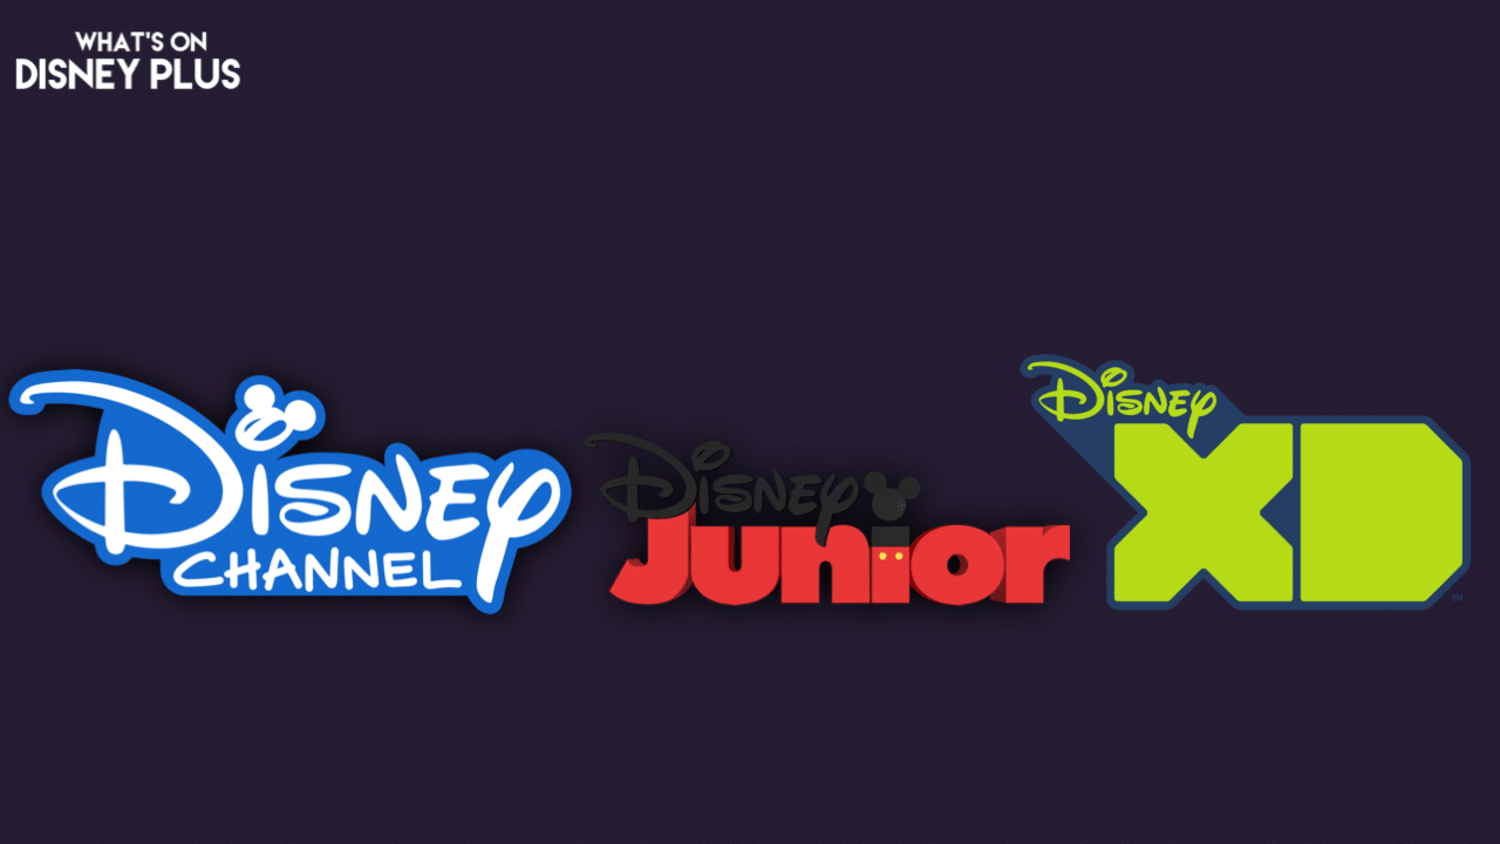 Disney, Disney Junior, and Disney XD